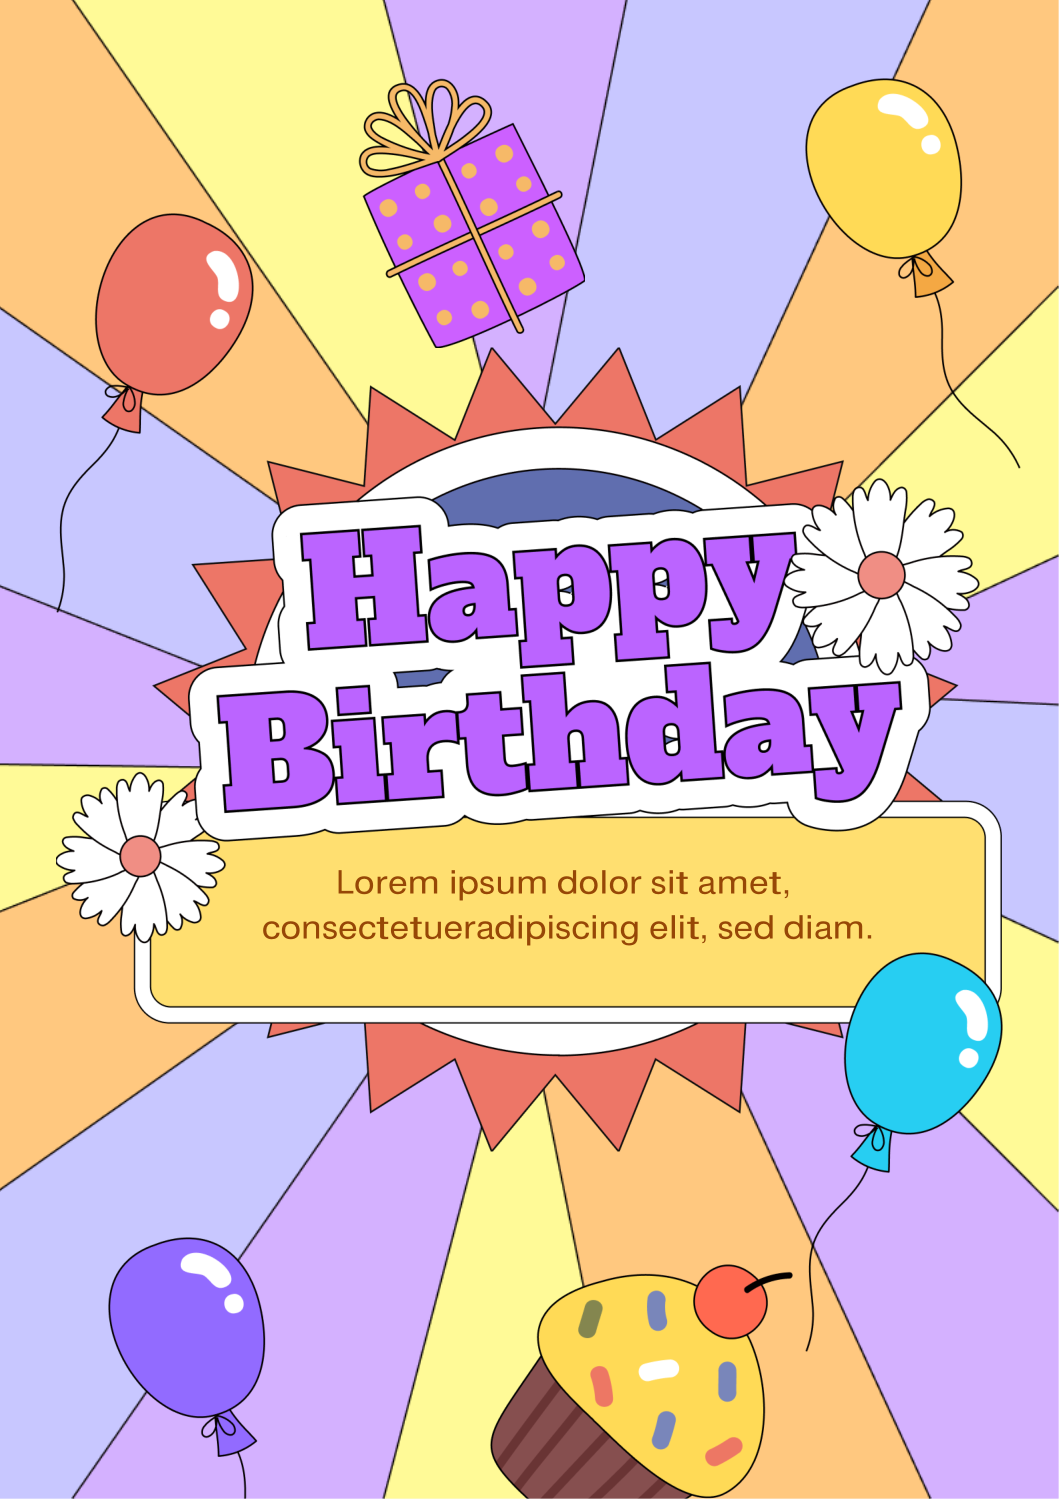 Belated birthday wishes 2